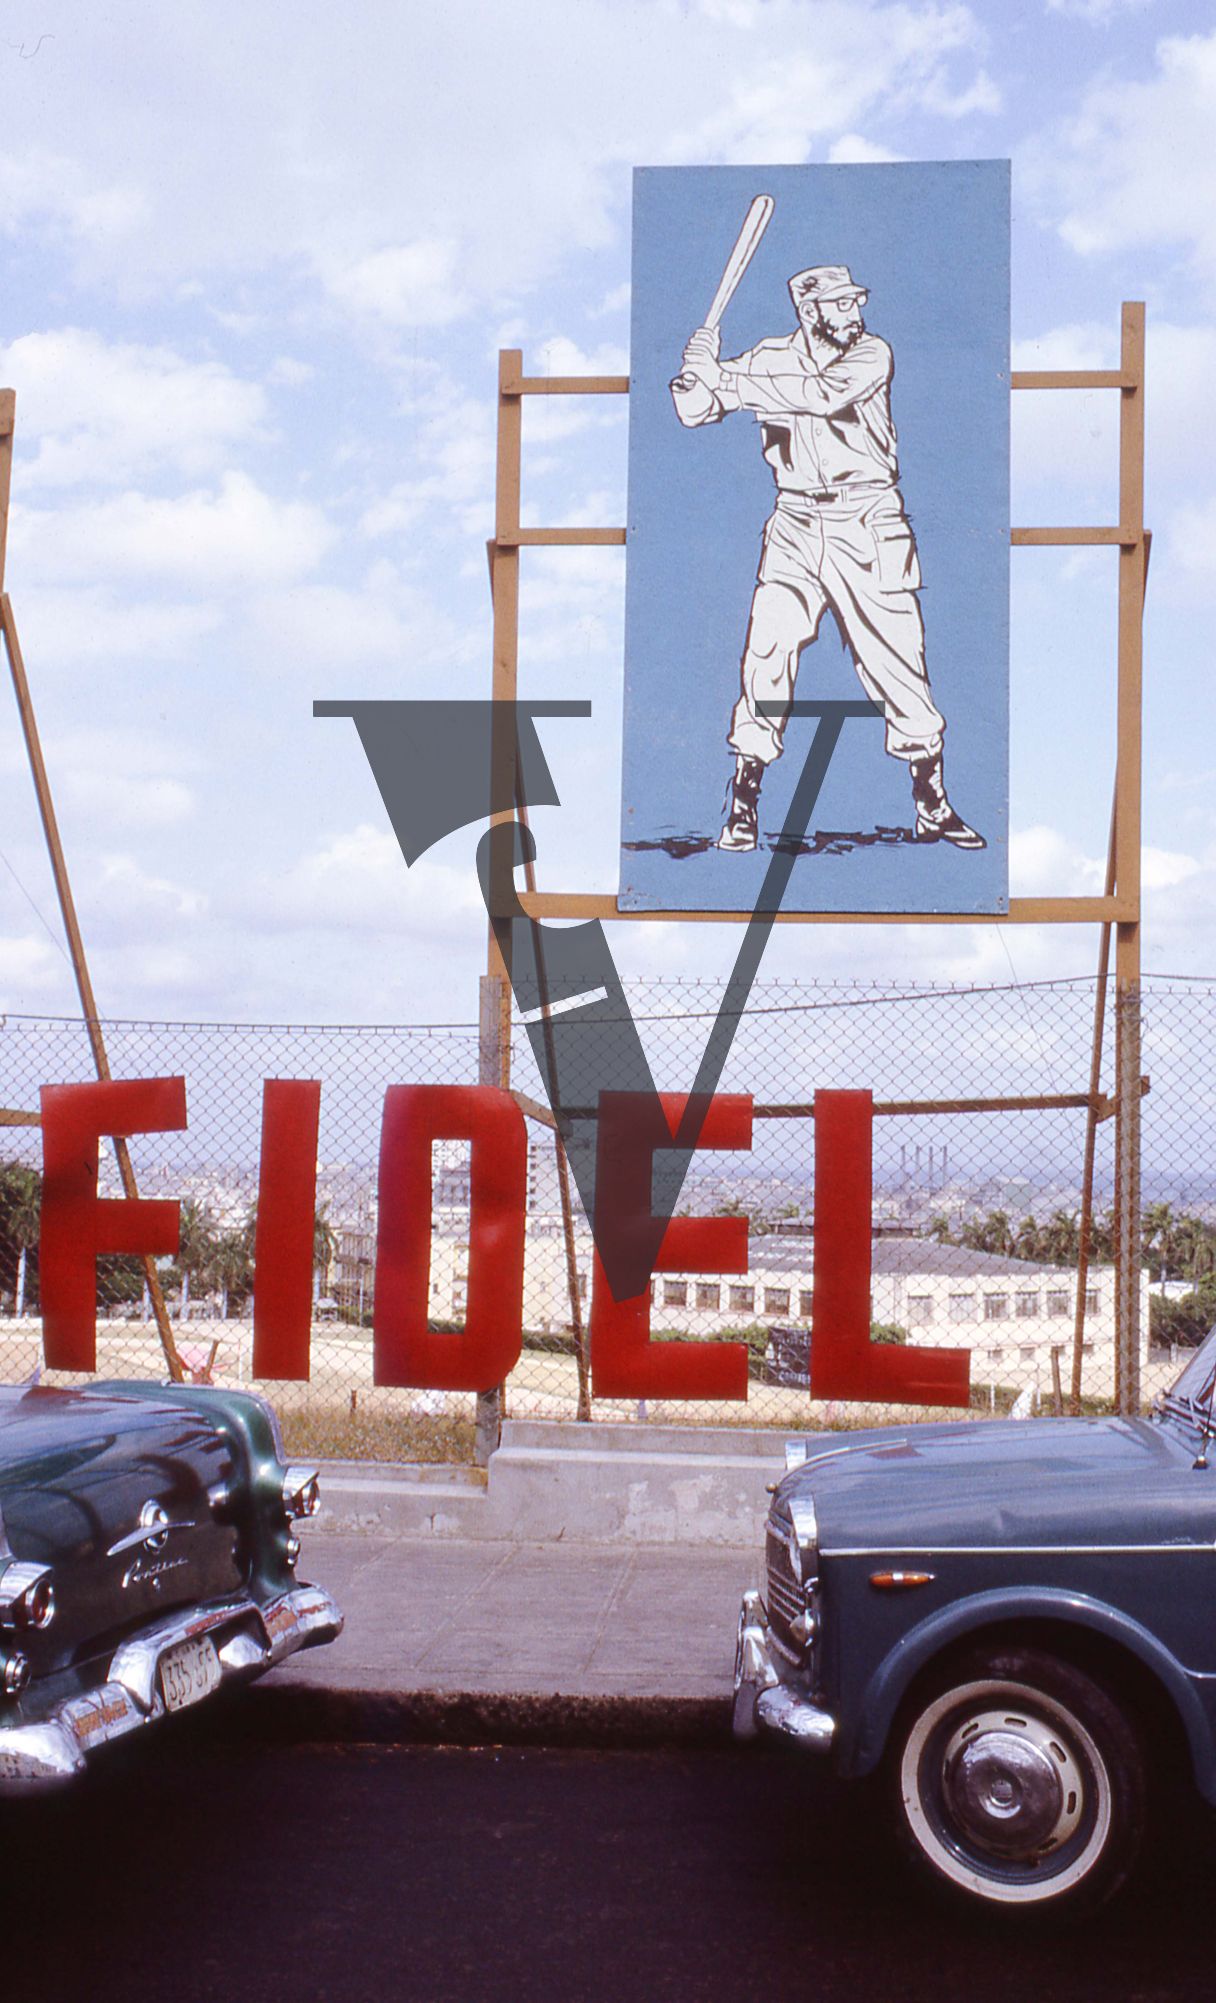 Cuba, Fidel Castro sports billboards, Castro playing baseball.